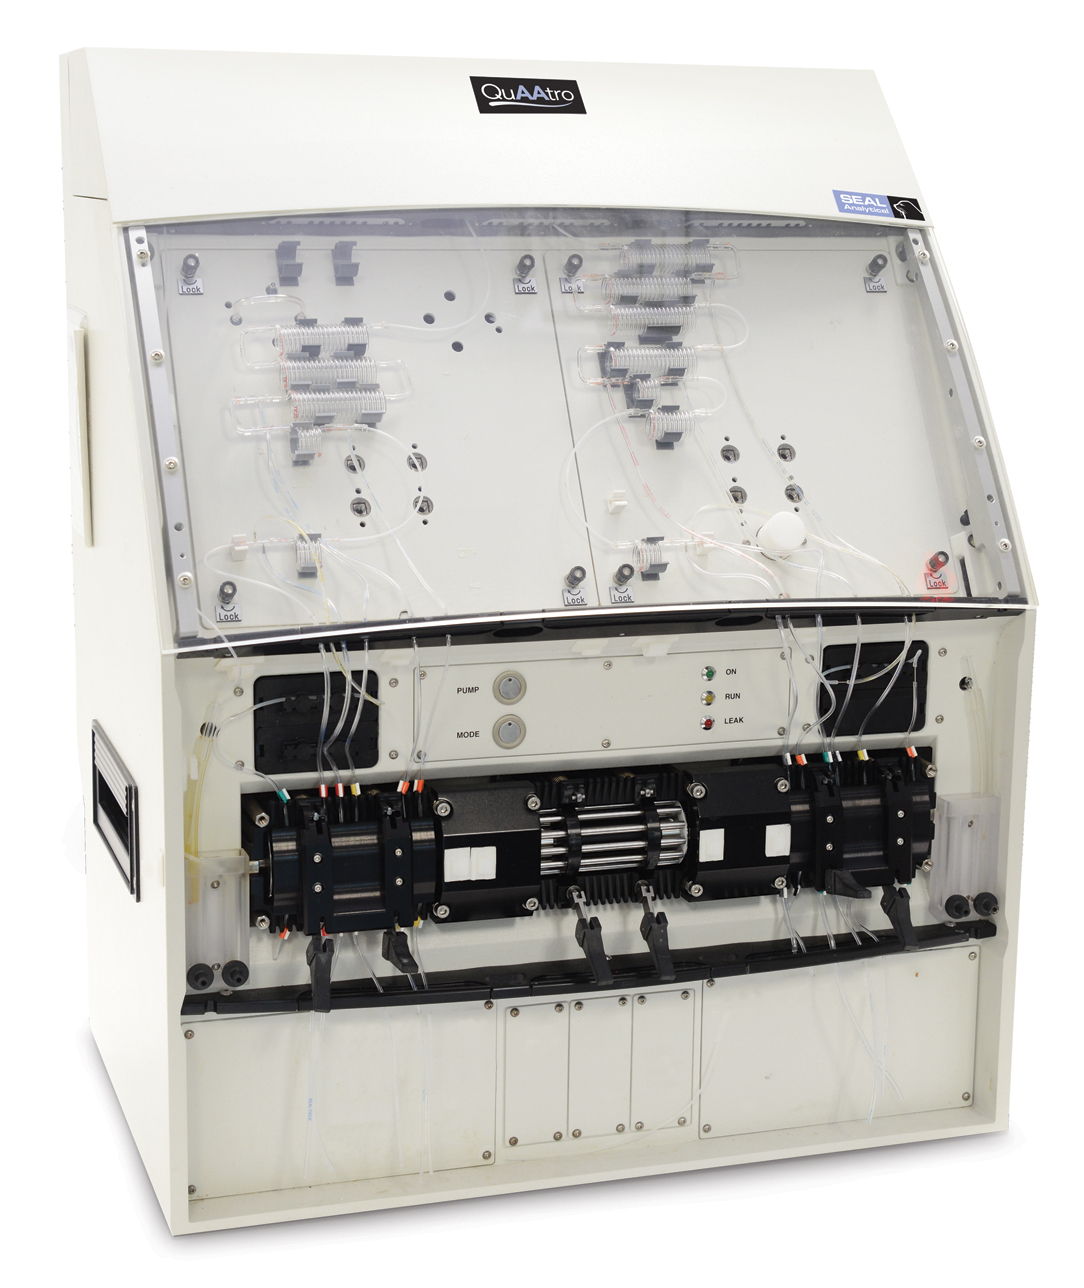 QuAAtro 39 micro flow analyzer